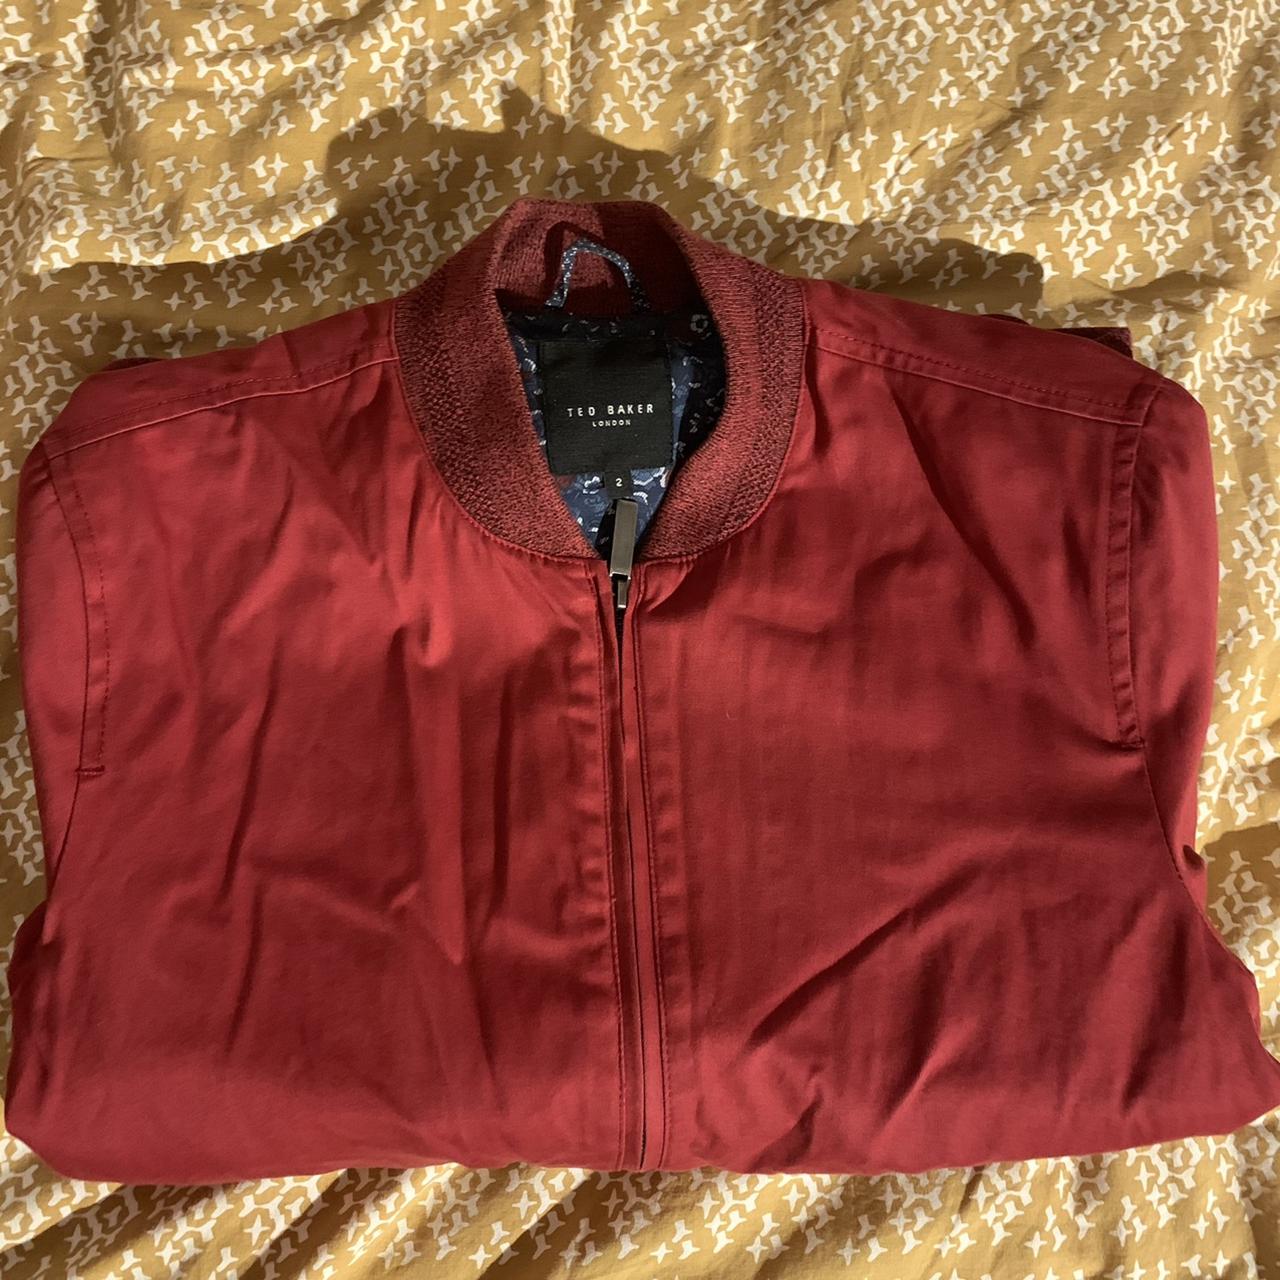 Tantalising red ted baker jacket proper quality when... - Depop